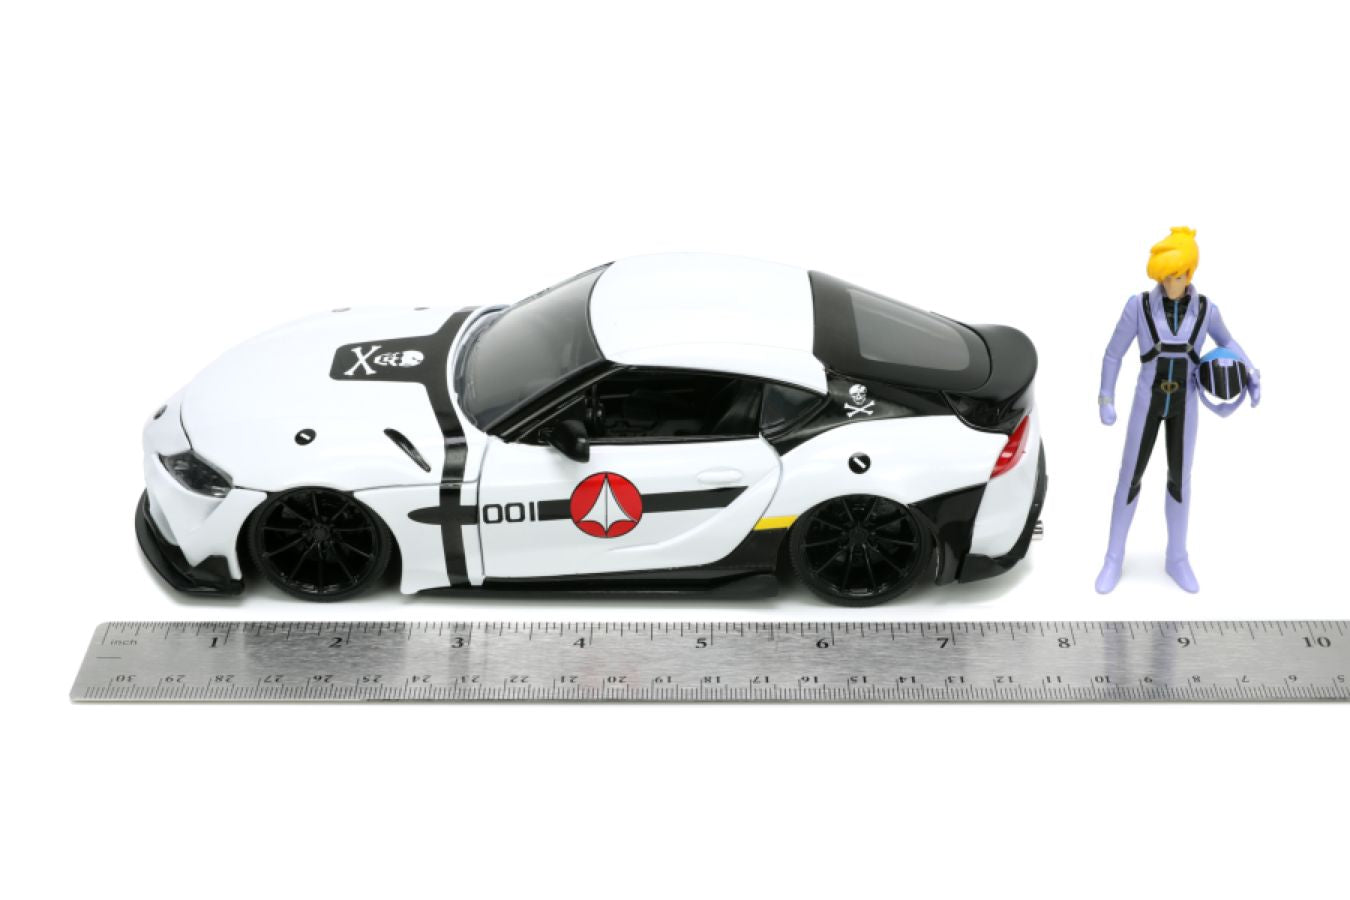 Robotech - Roy Focker & 2020 Toyota Supra 1:24 Scale